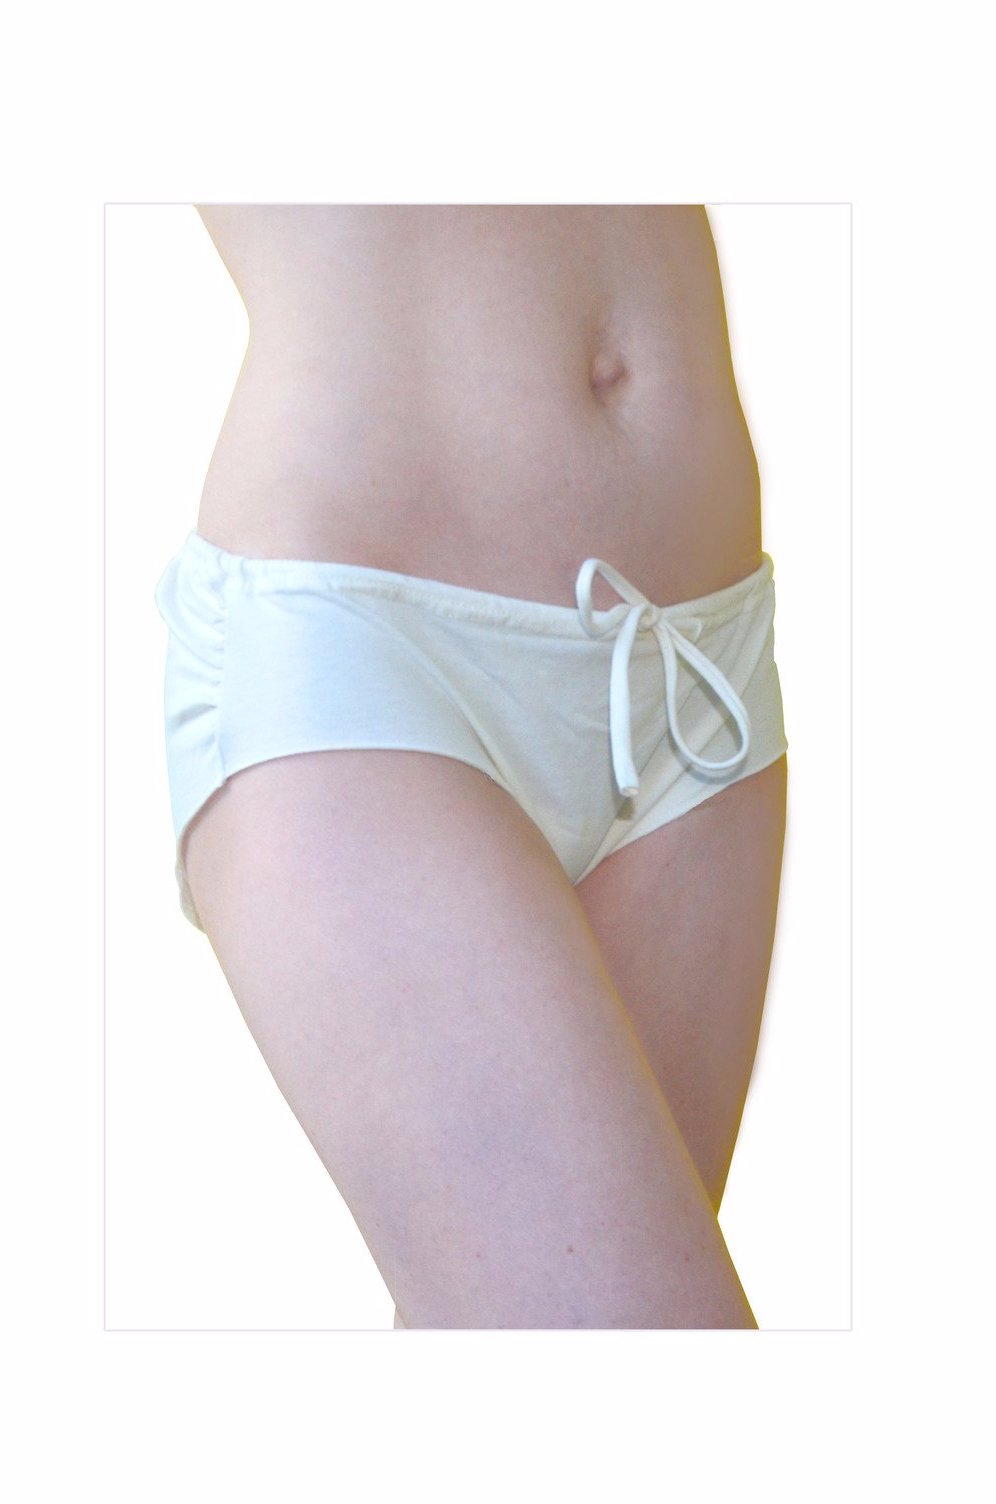 100% cotton drawstring postpartum underwear by Pretty Pushers